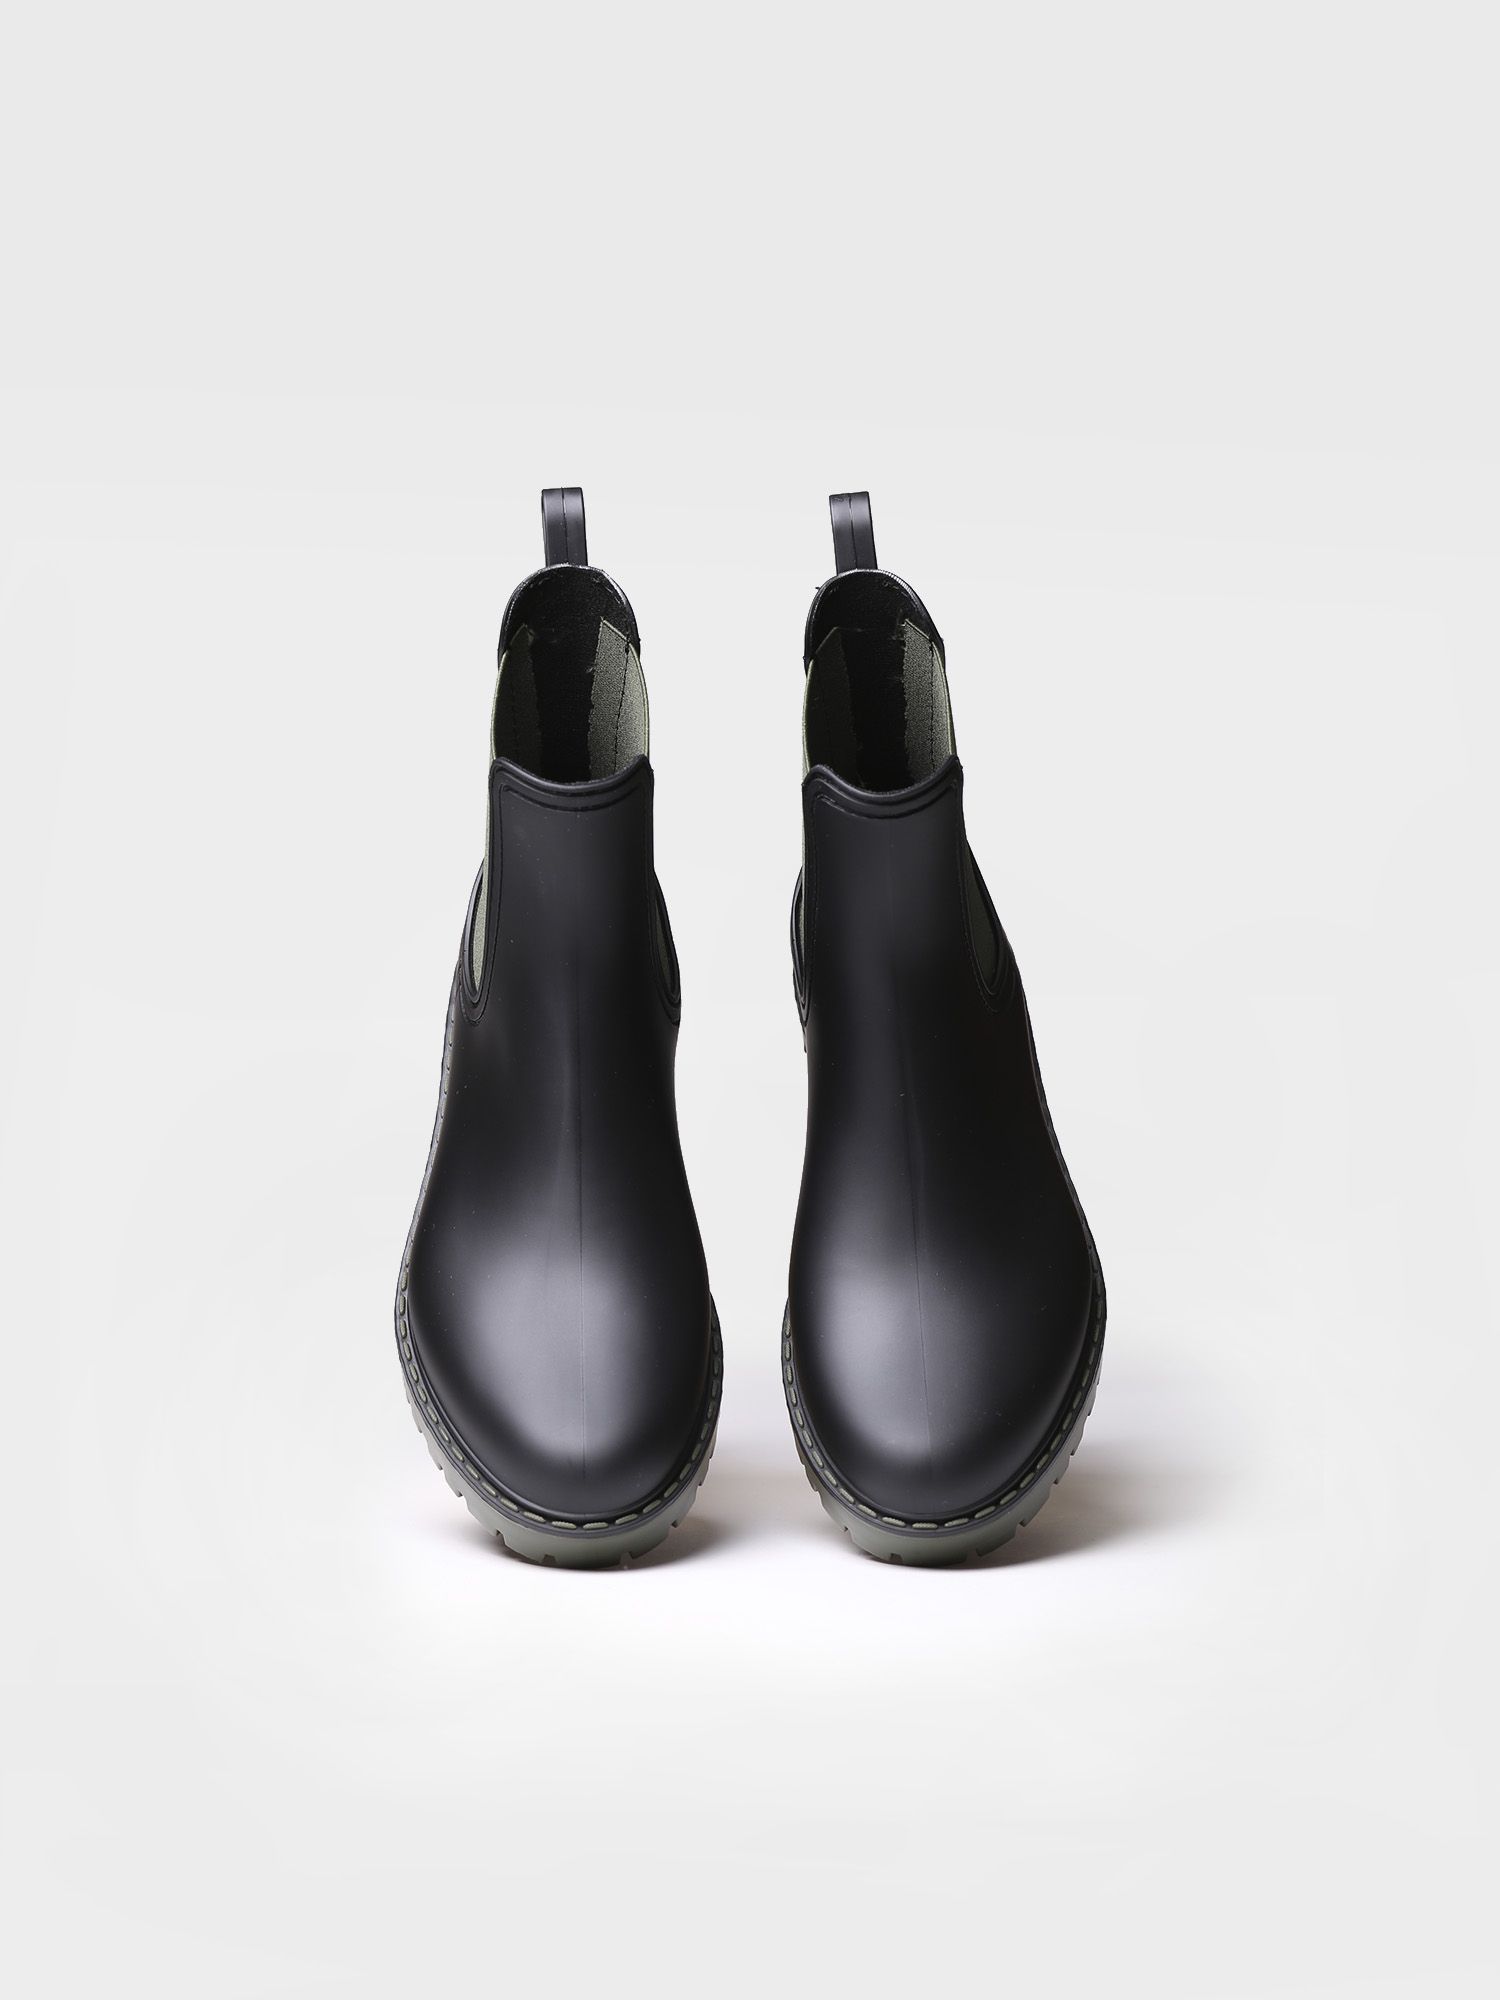 rubber cork boots